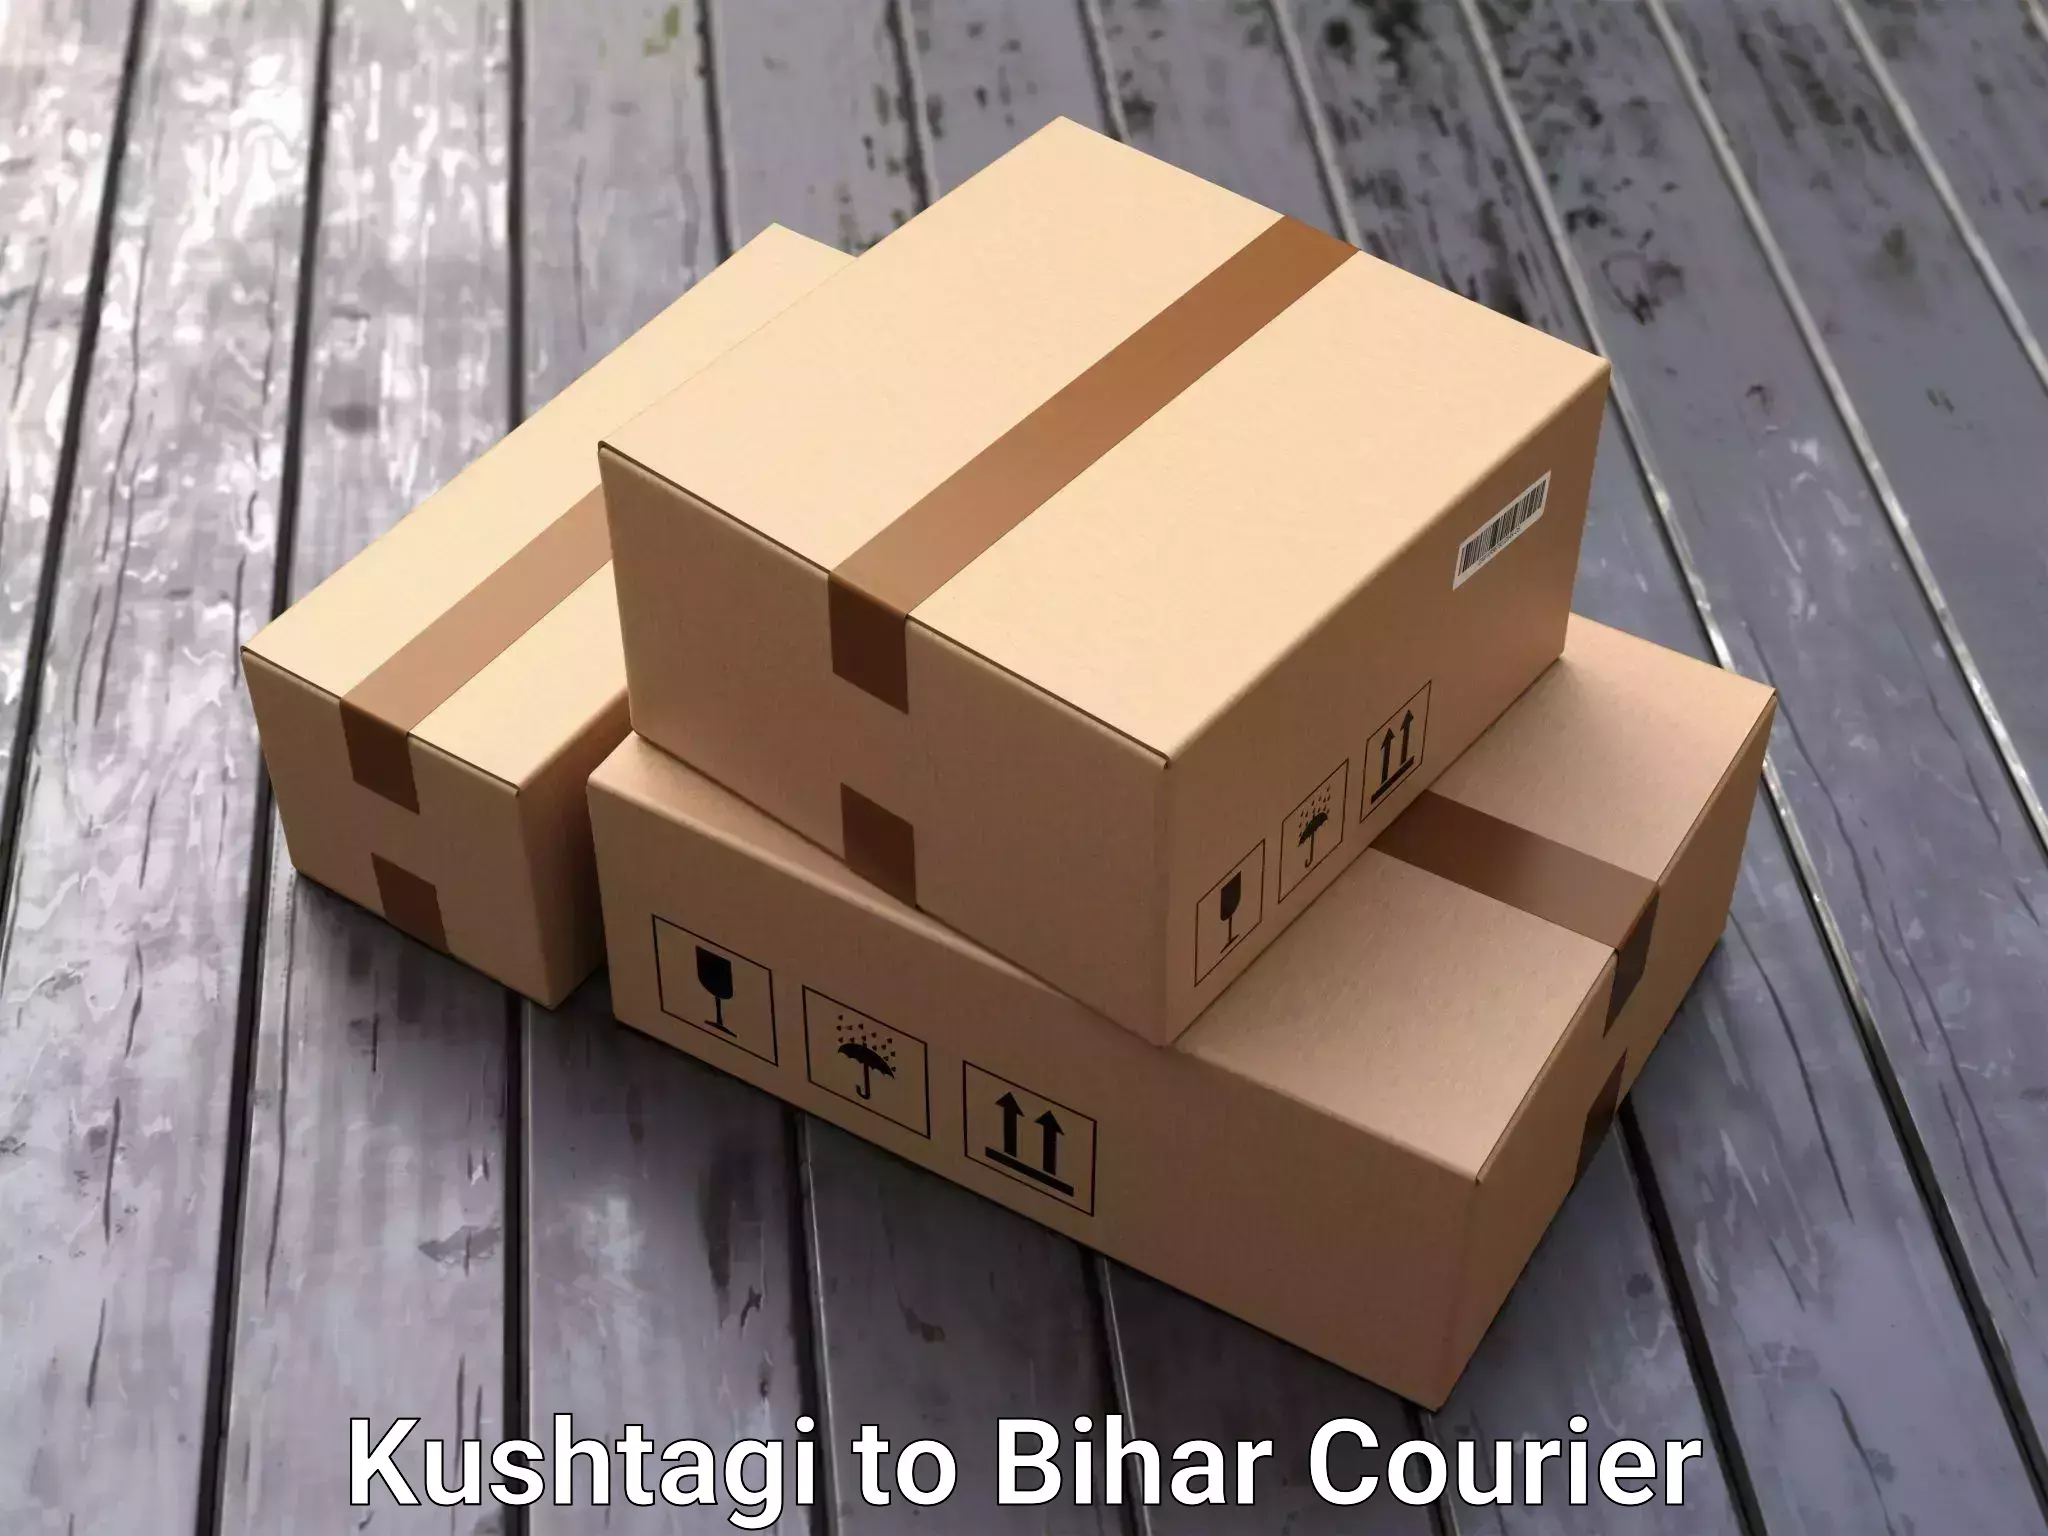 Trusted moving company Kushtagi to Rusera